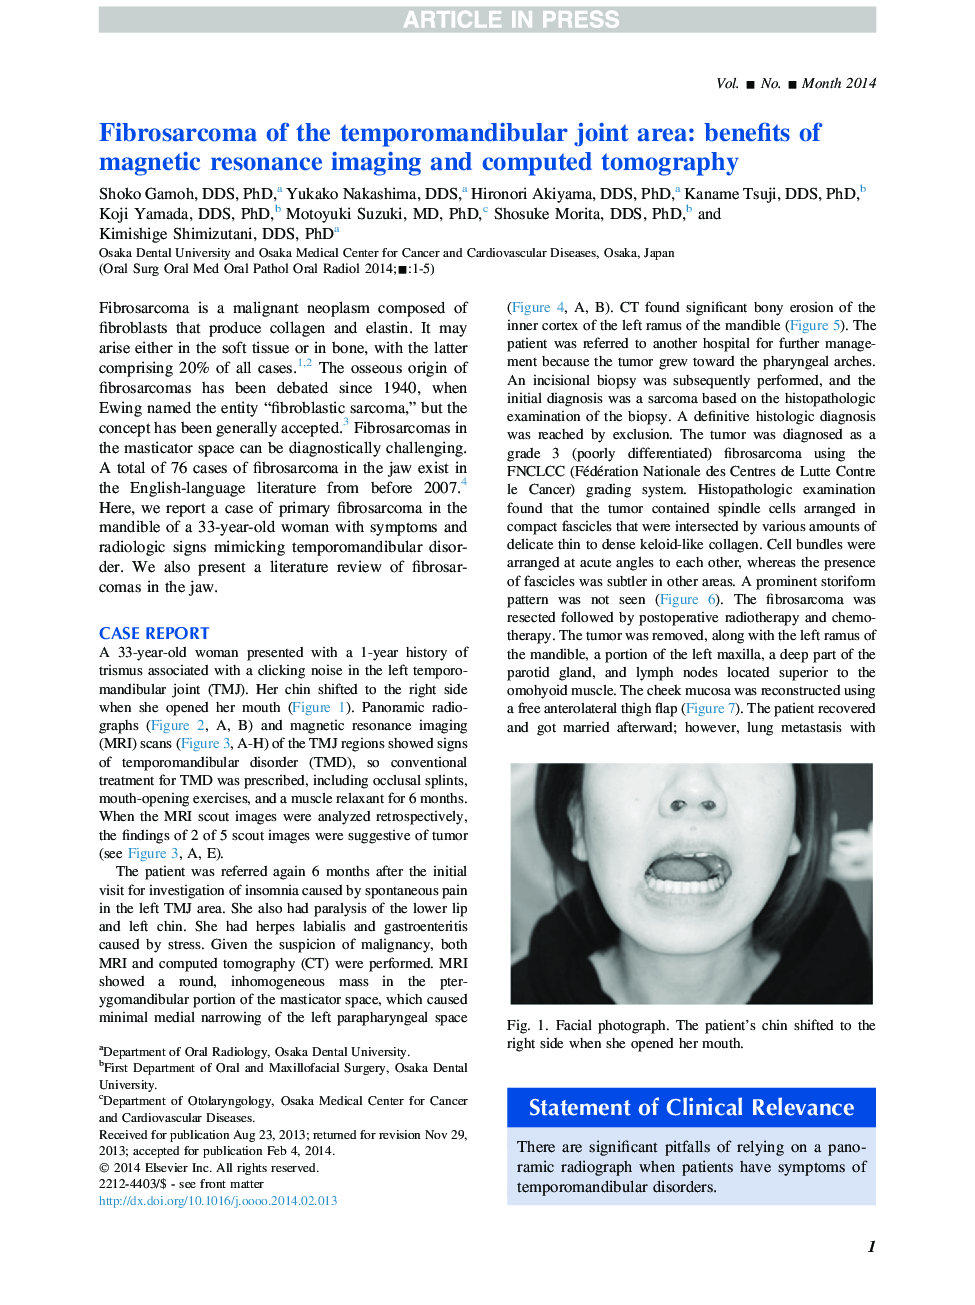 Fibrosarcoma of the temporomandibular joint area: benefits of magnetic resonance imaging and computed tomography